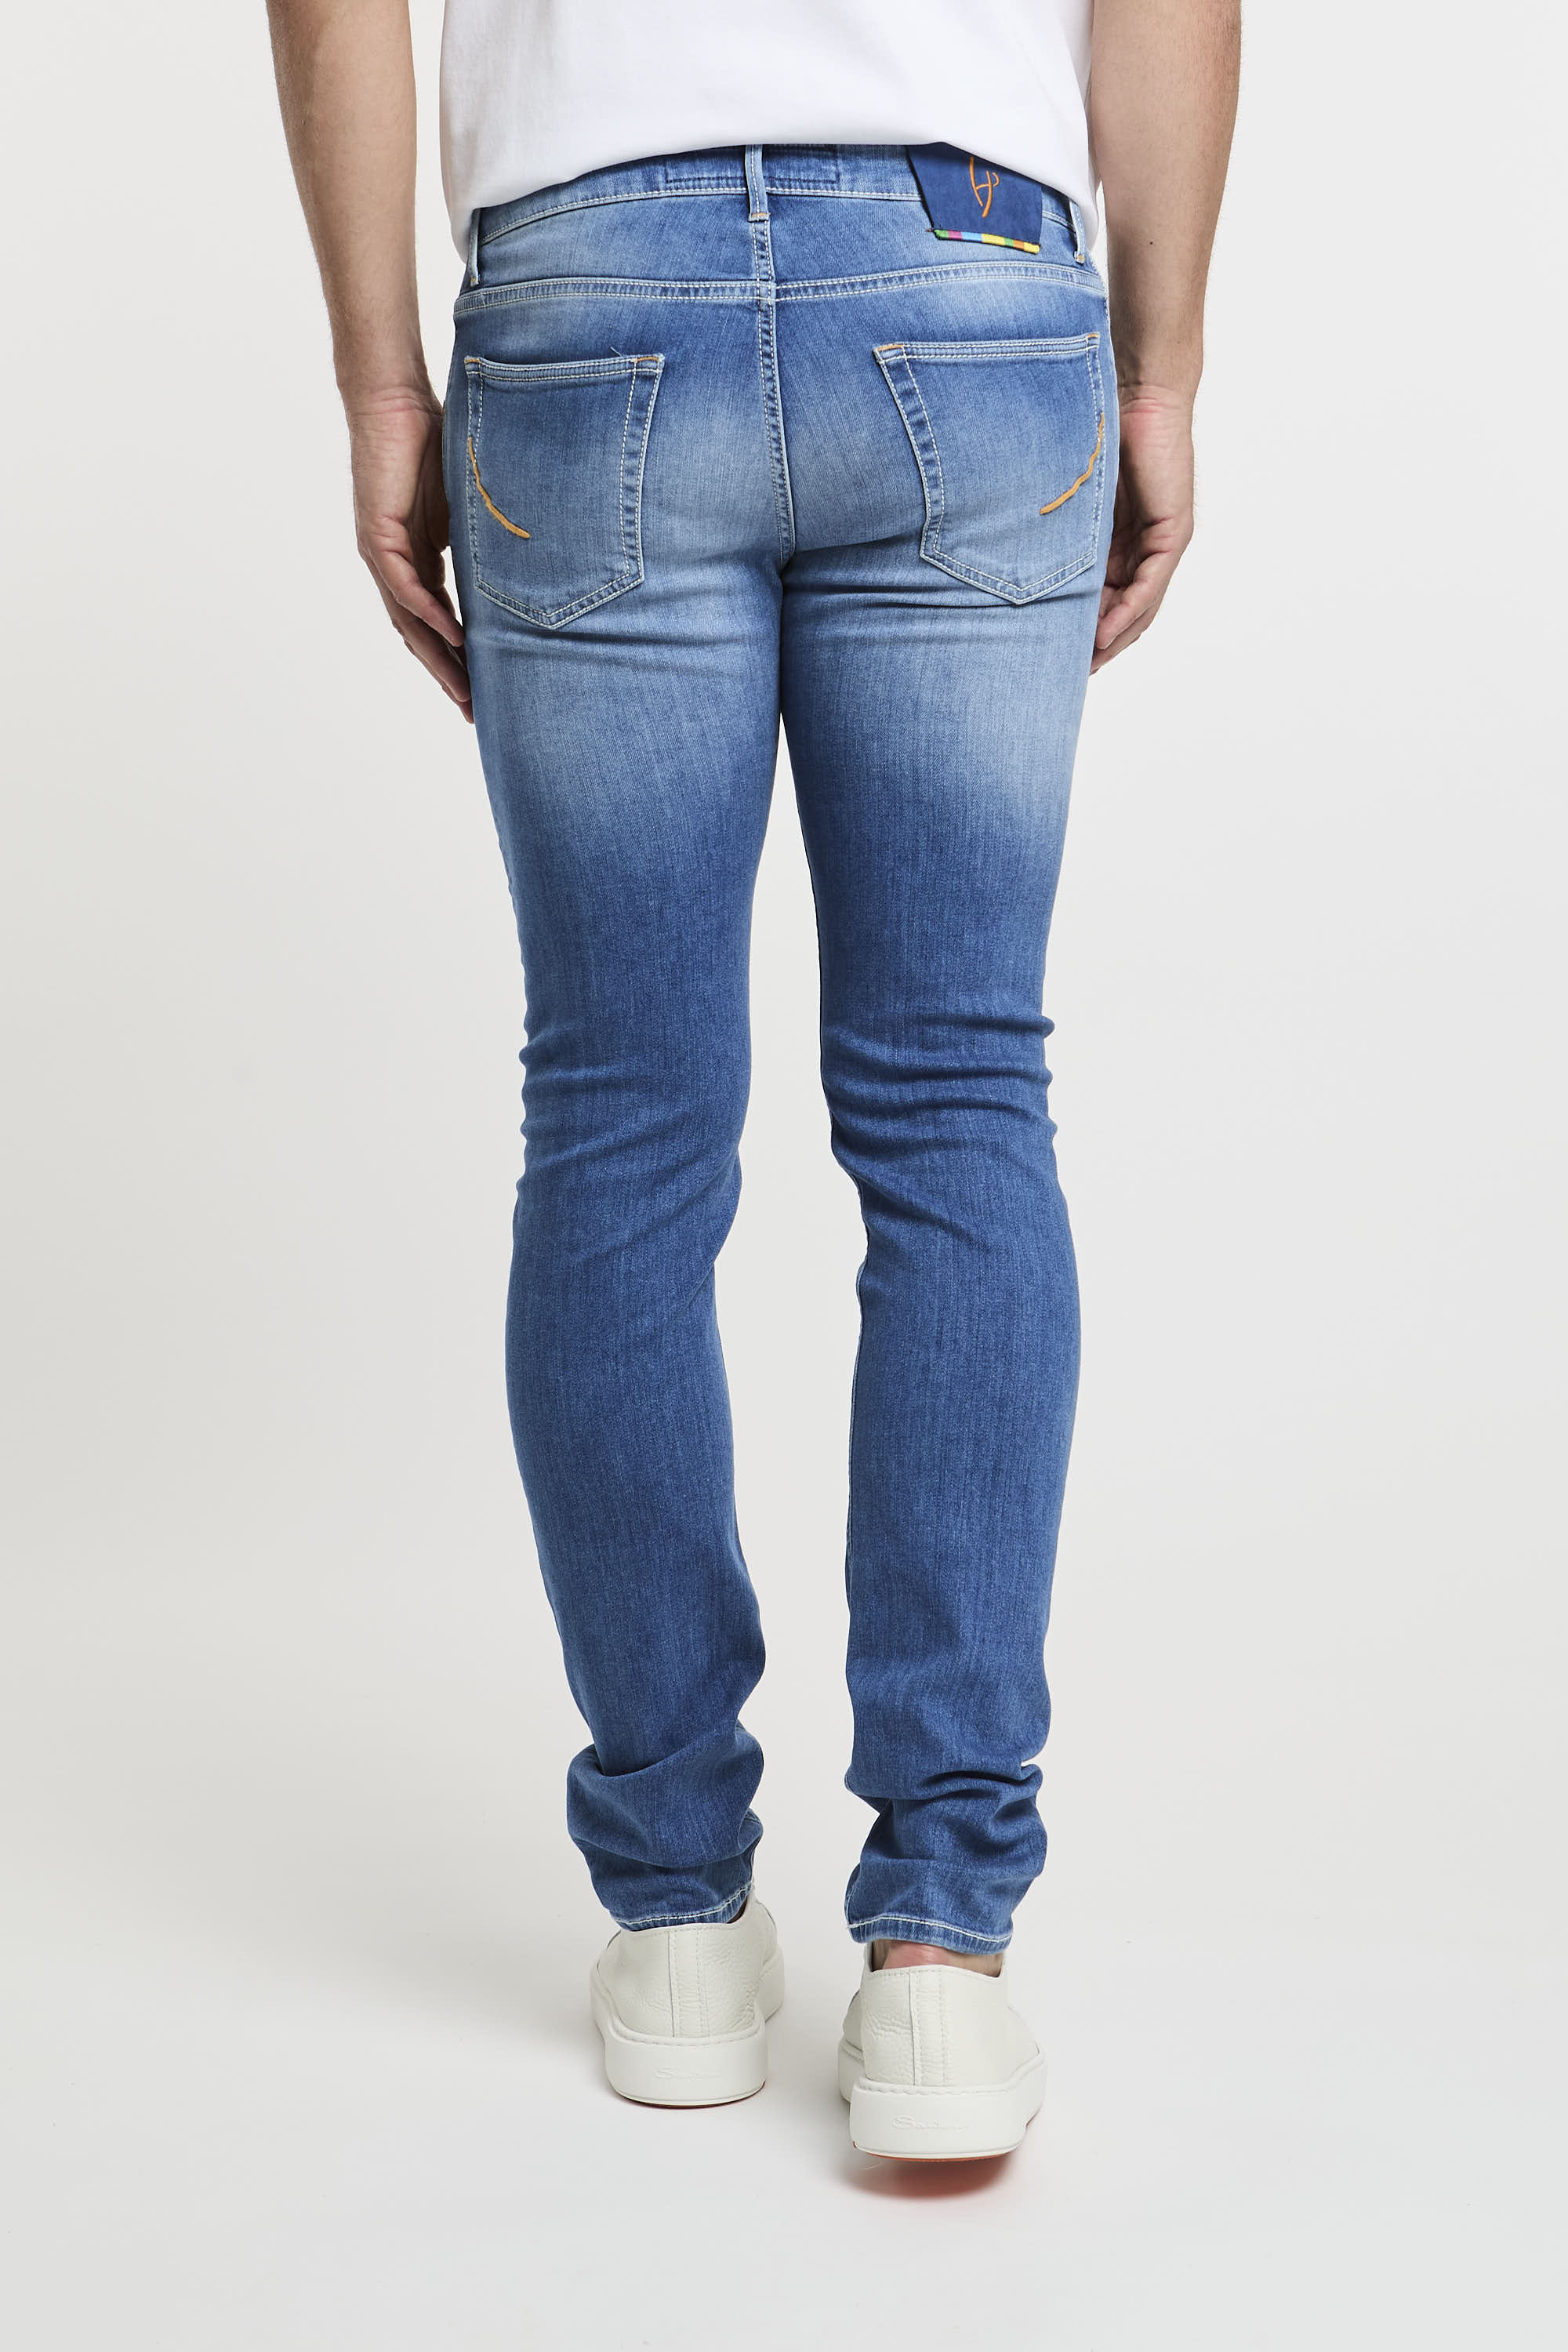 Handpicked Jeans Orvieto Cotton/Elastomultiester Denim-5